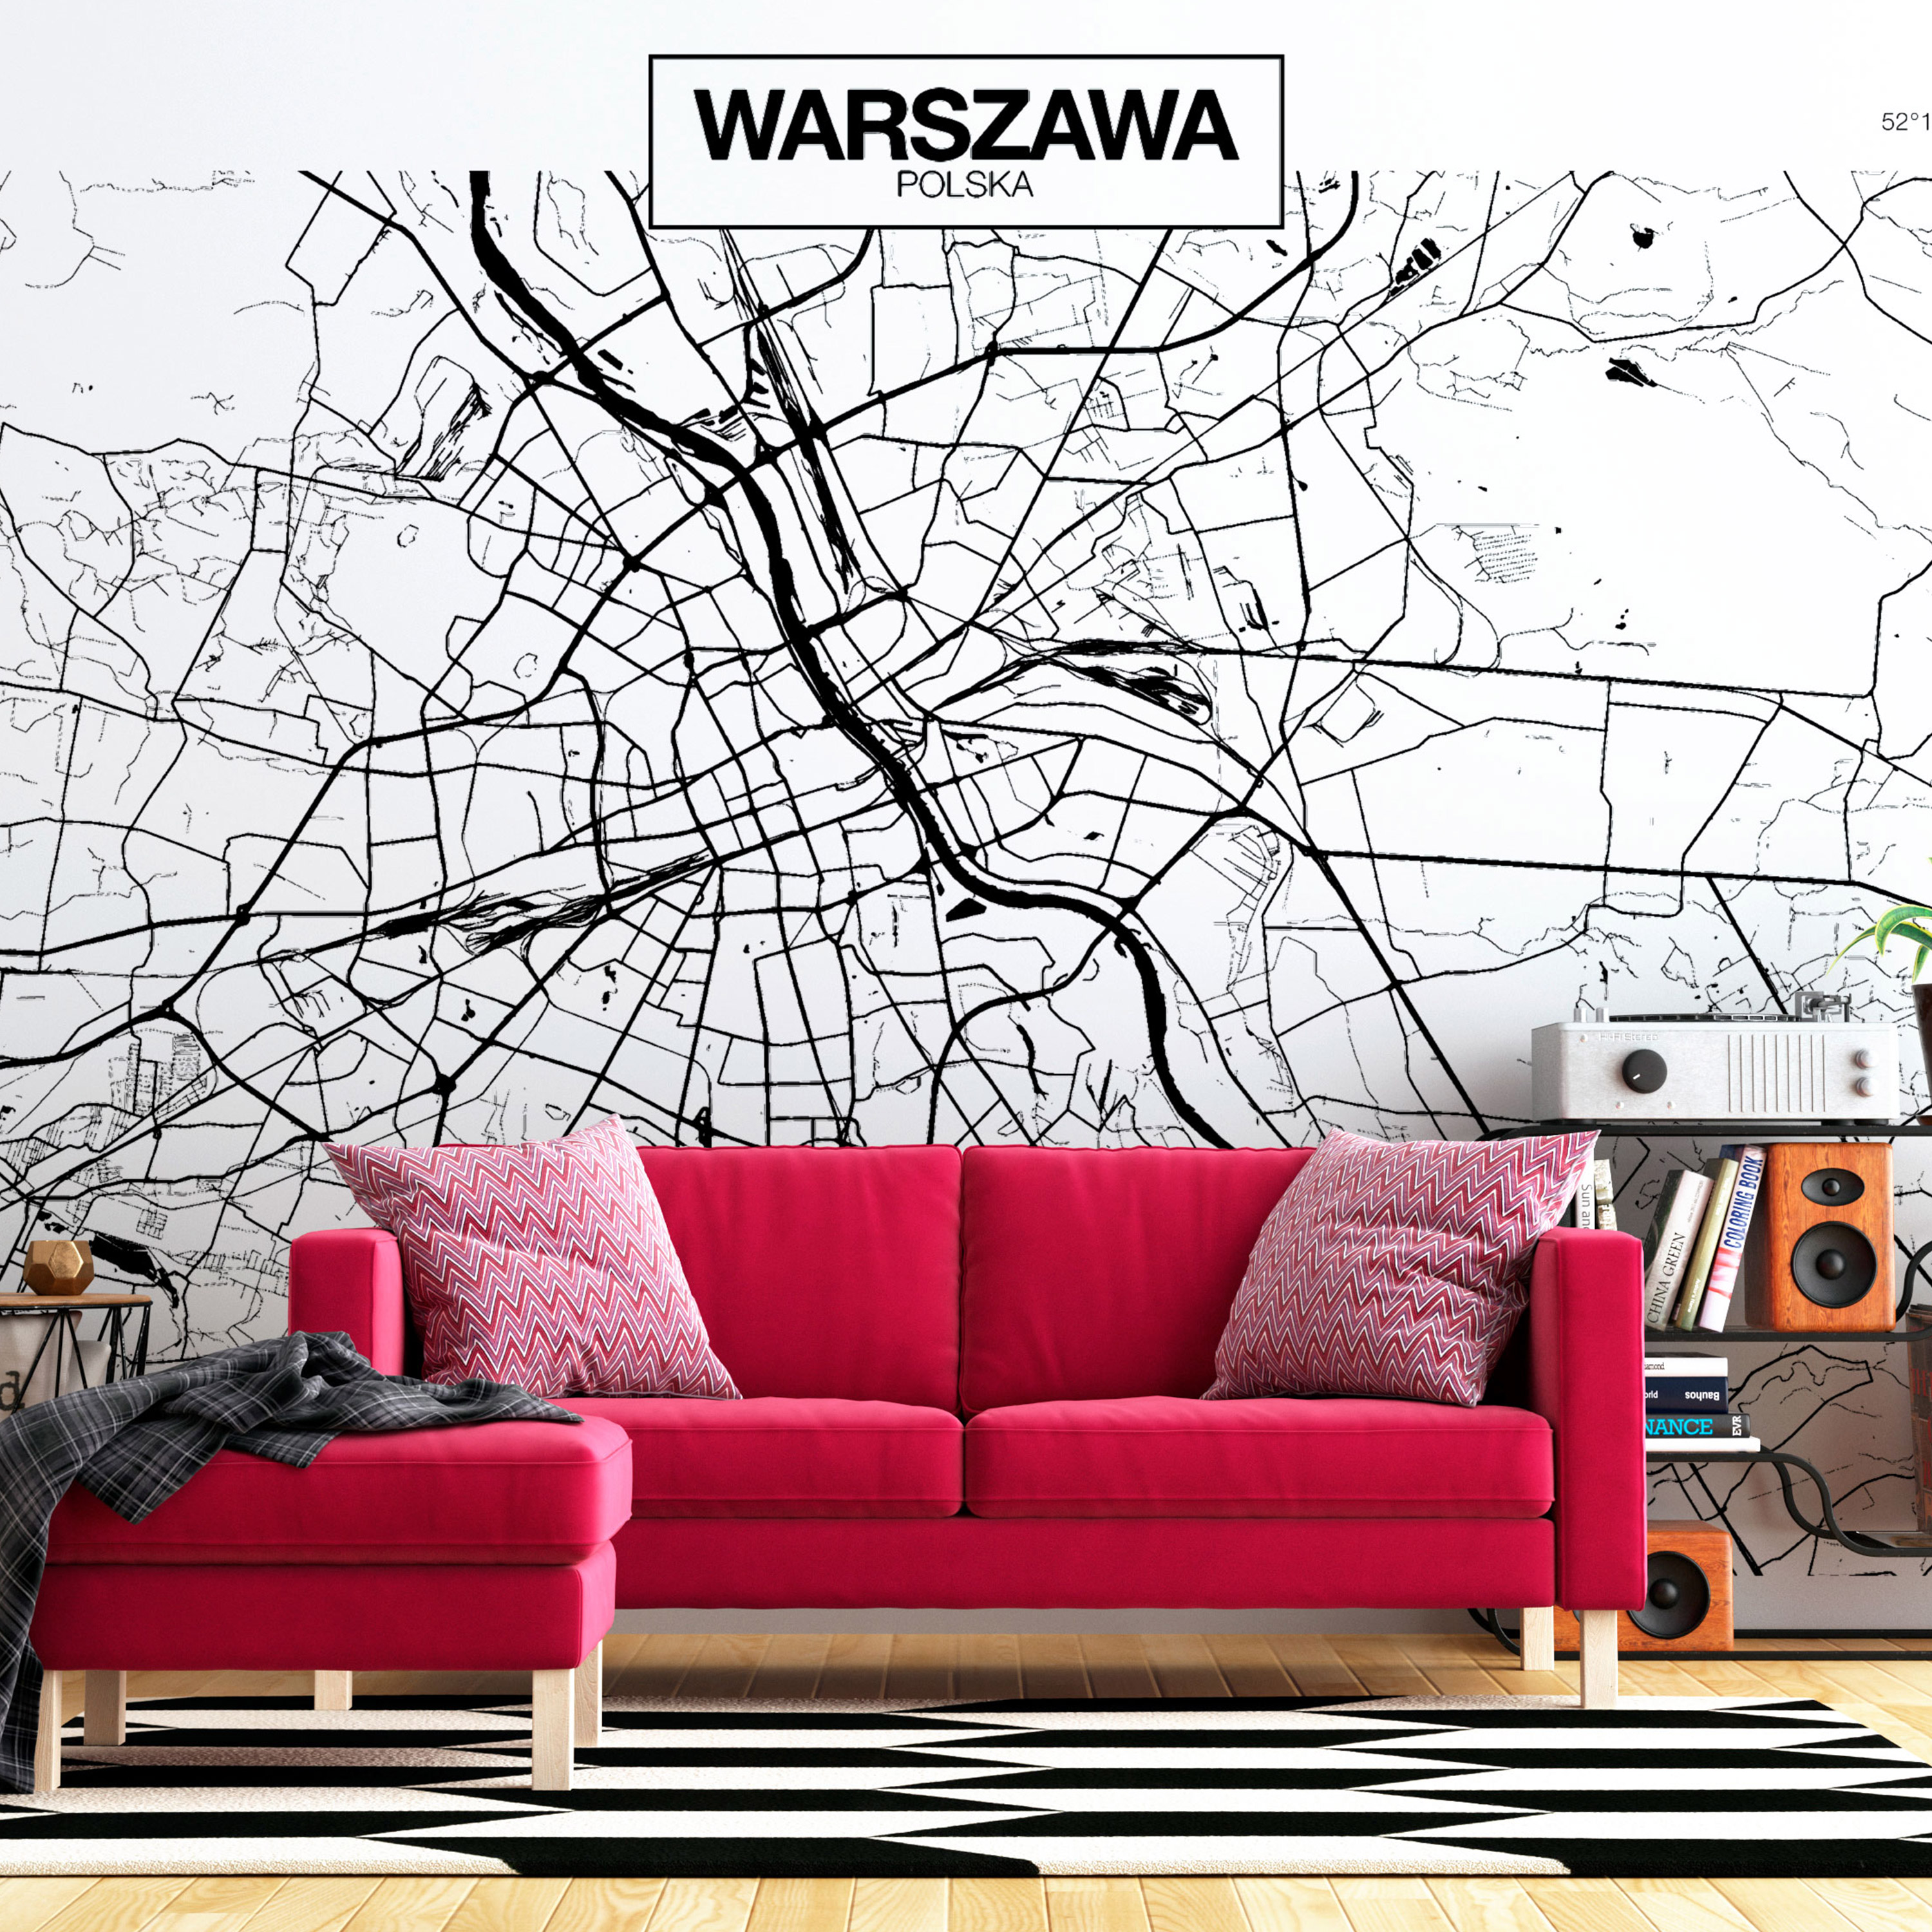 Self-adhesive Wallpaper - Warsaw Map - 98x70